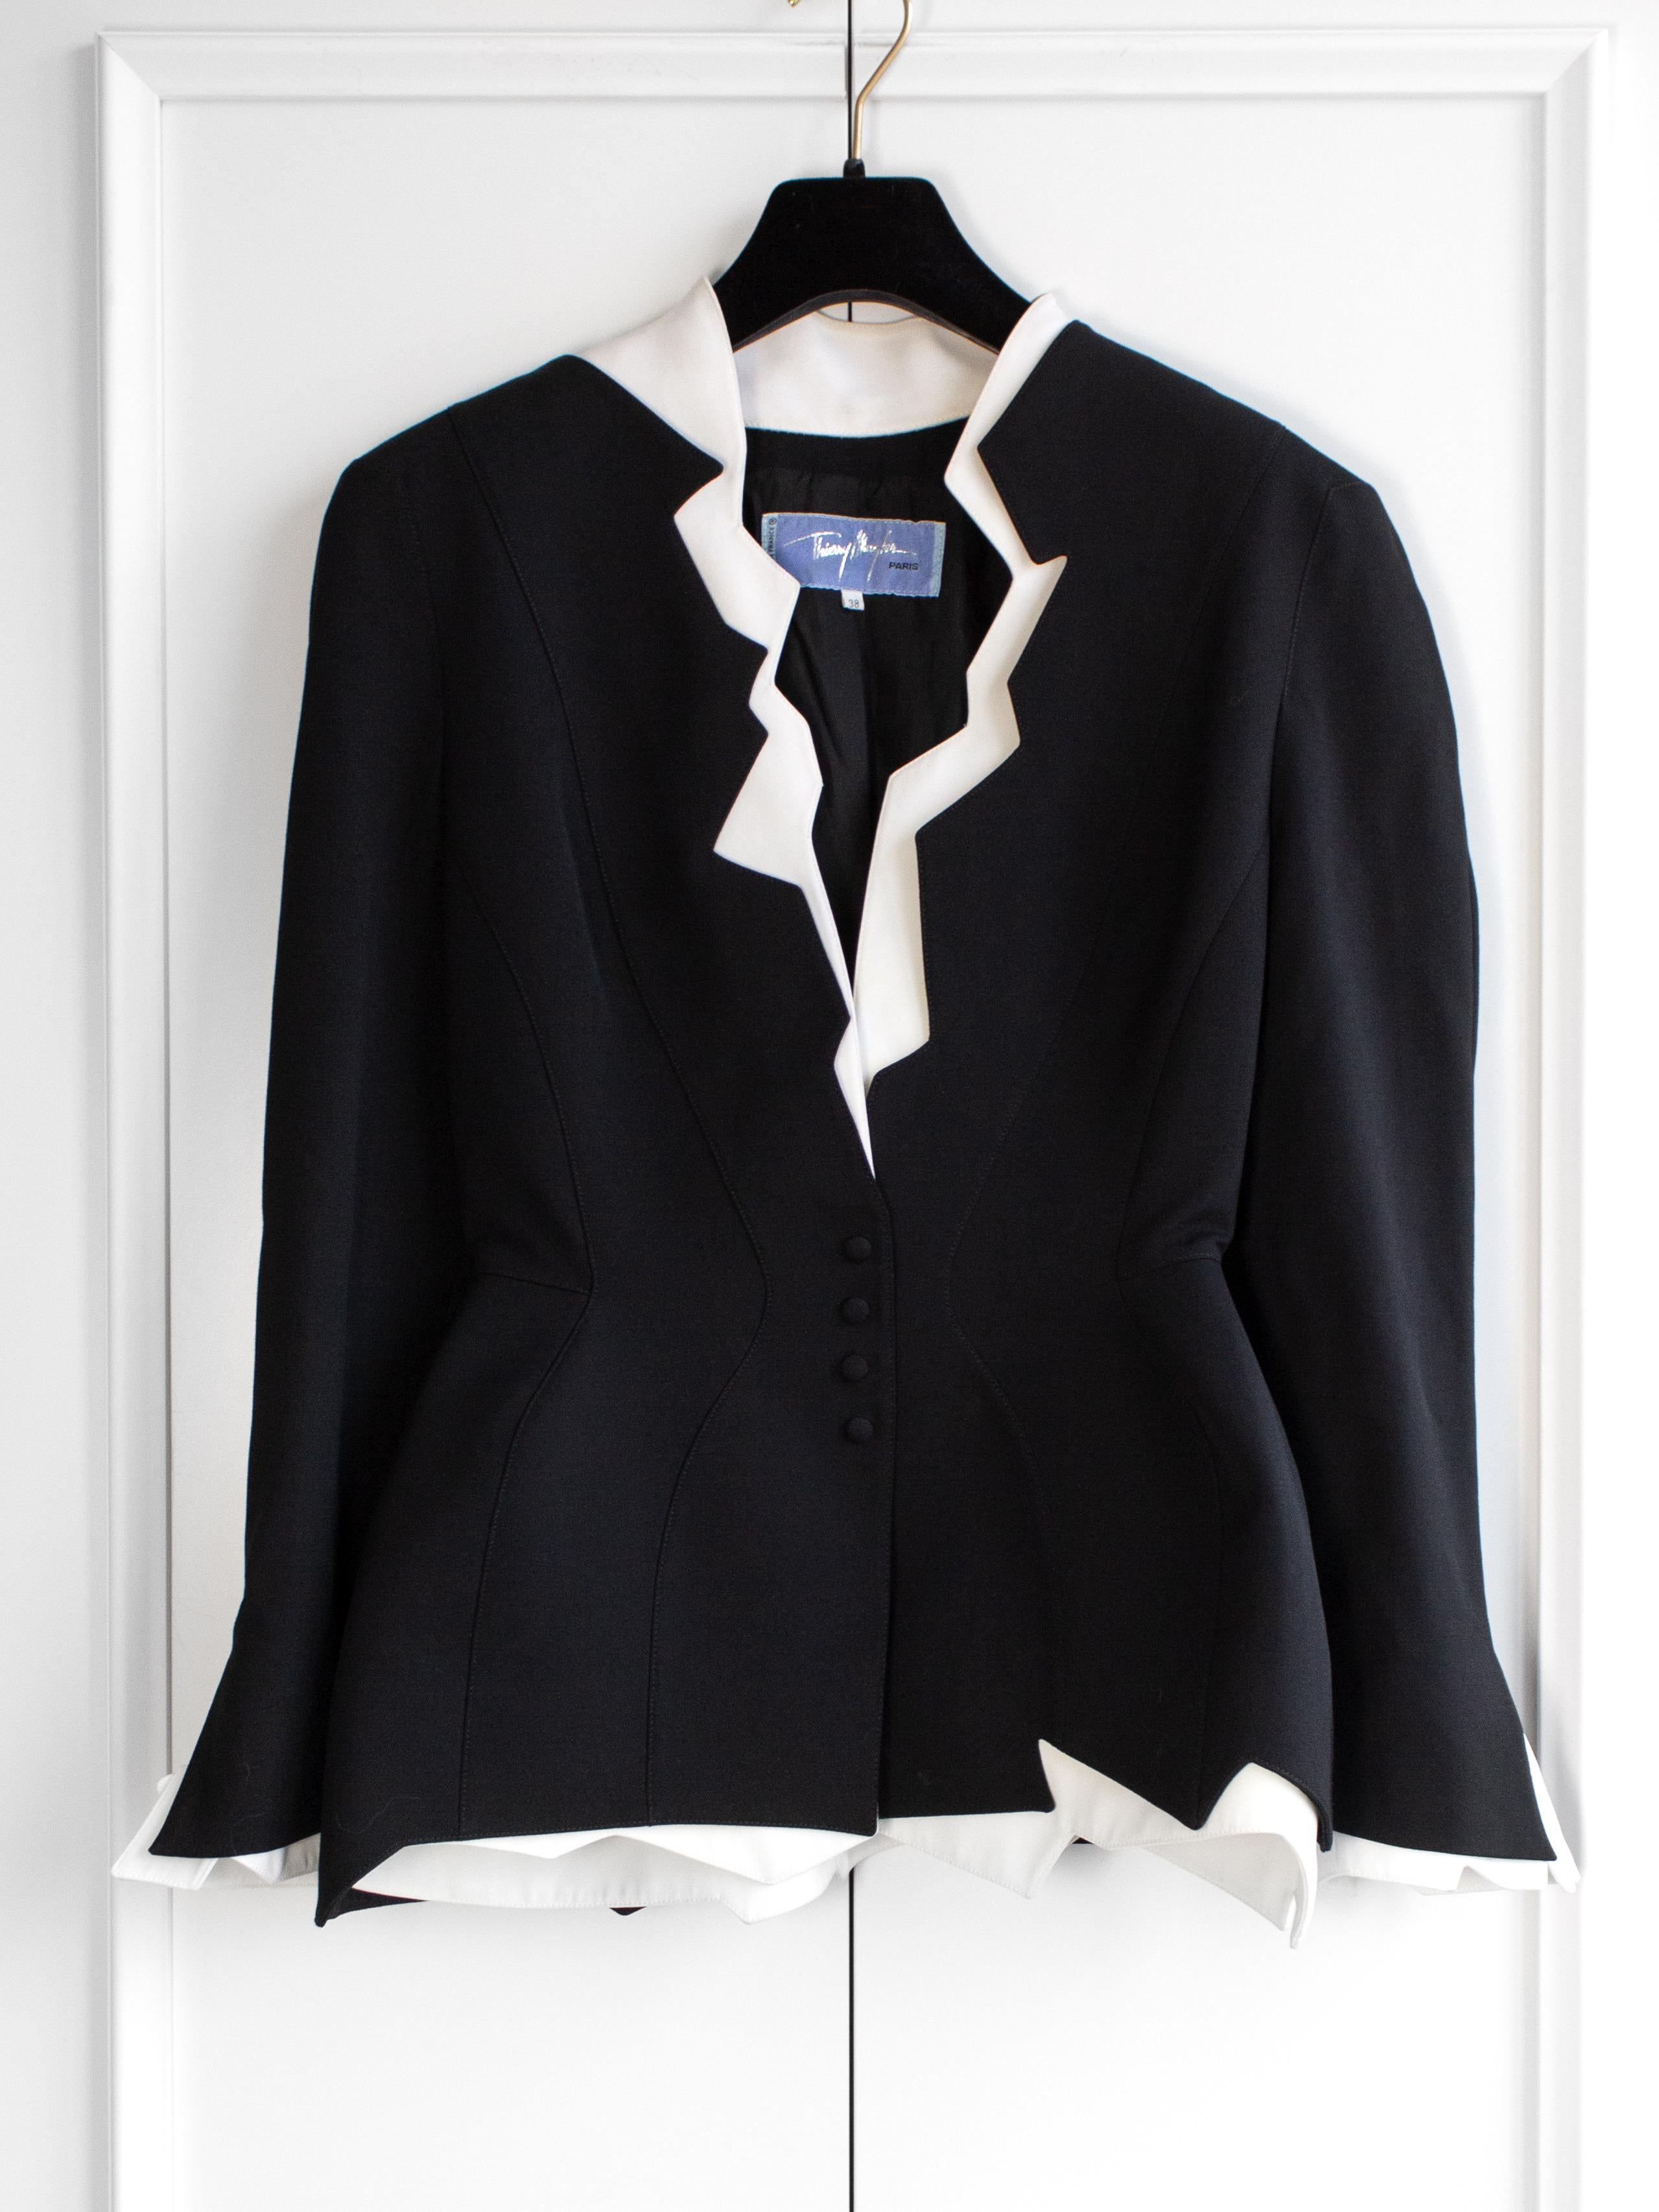 Icone Thierry Mugler Vintage S/S 1994 Black White Zigzag Sculptural Jacket en vente 2